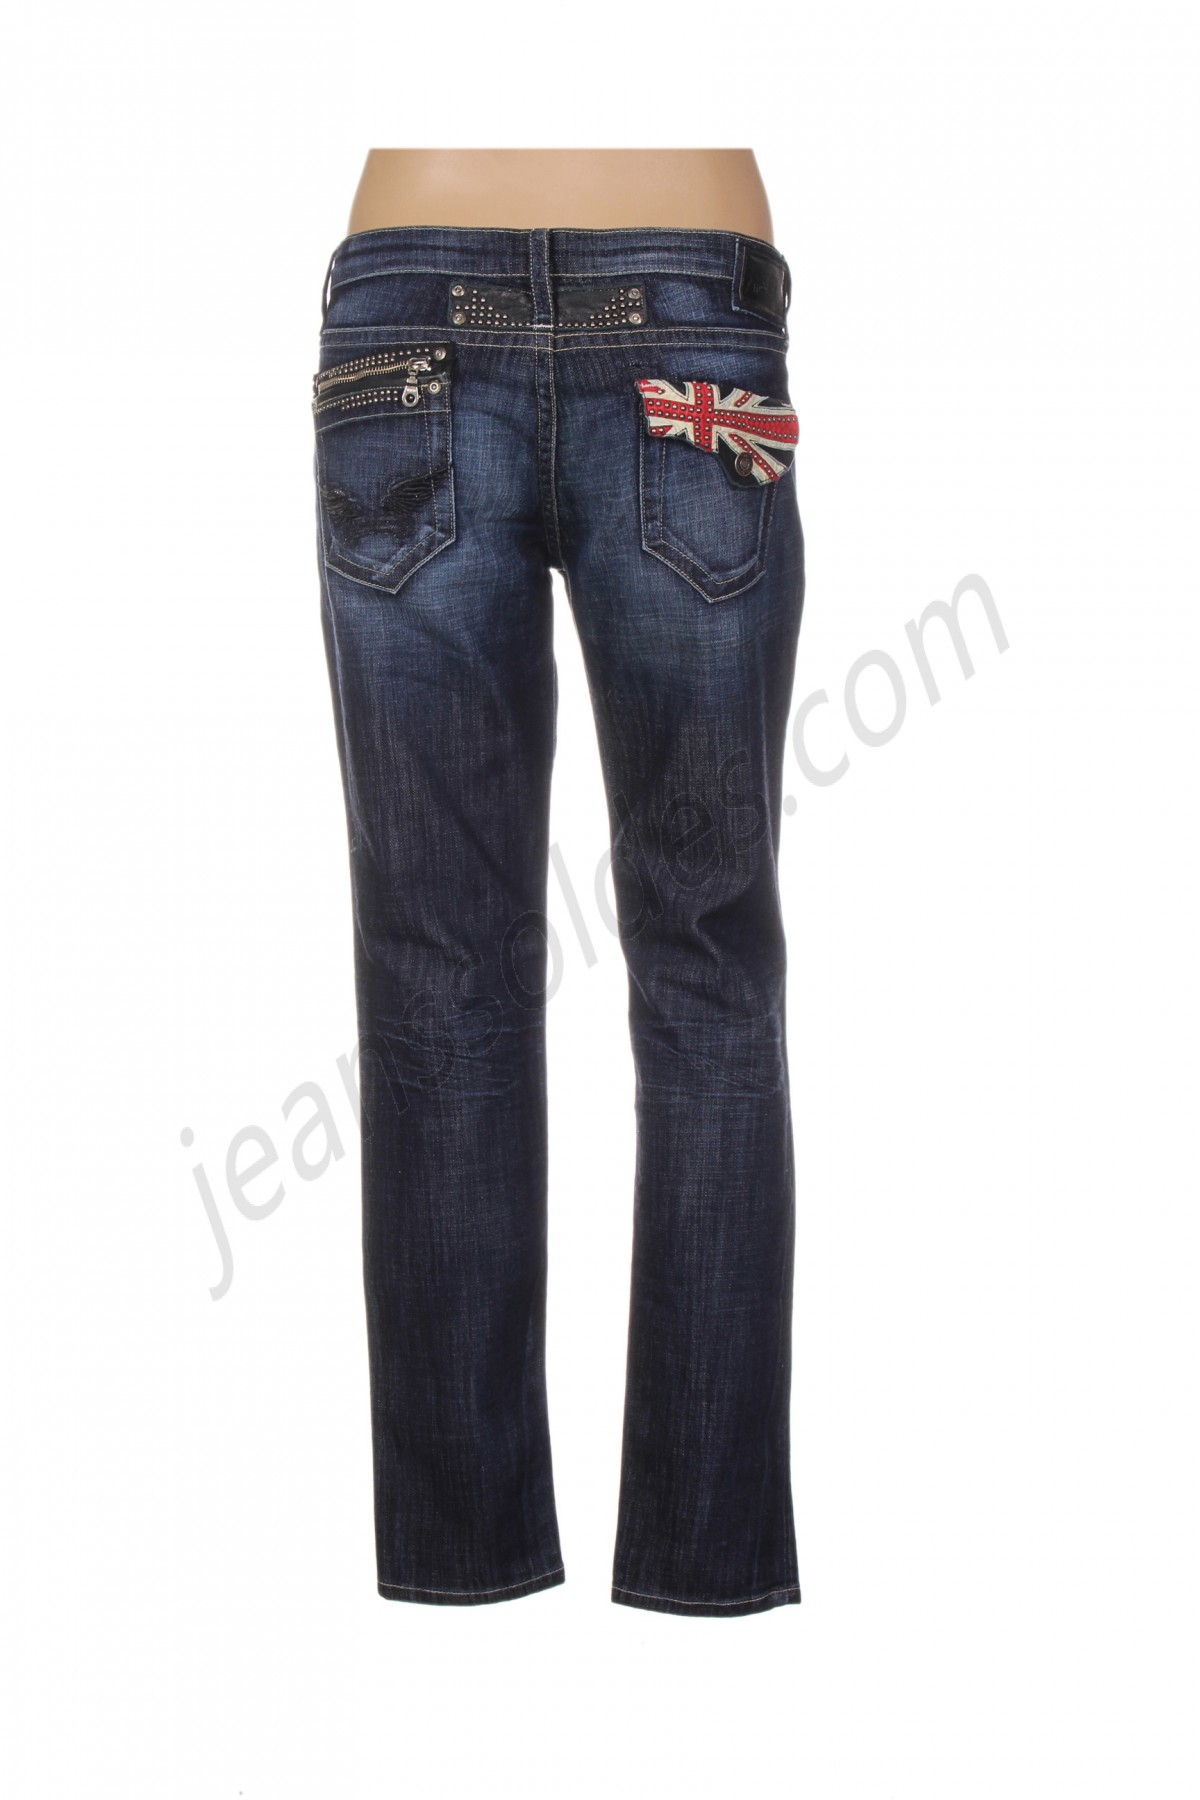 robin's jean-Jeans coupe slim prix d’amis - -1